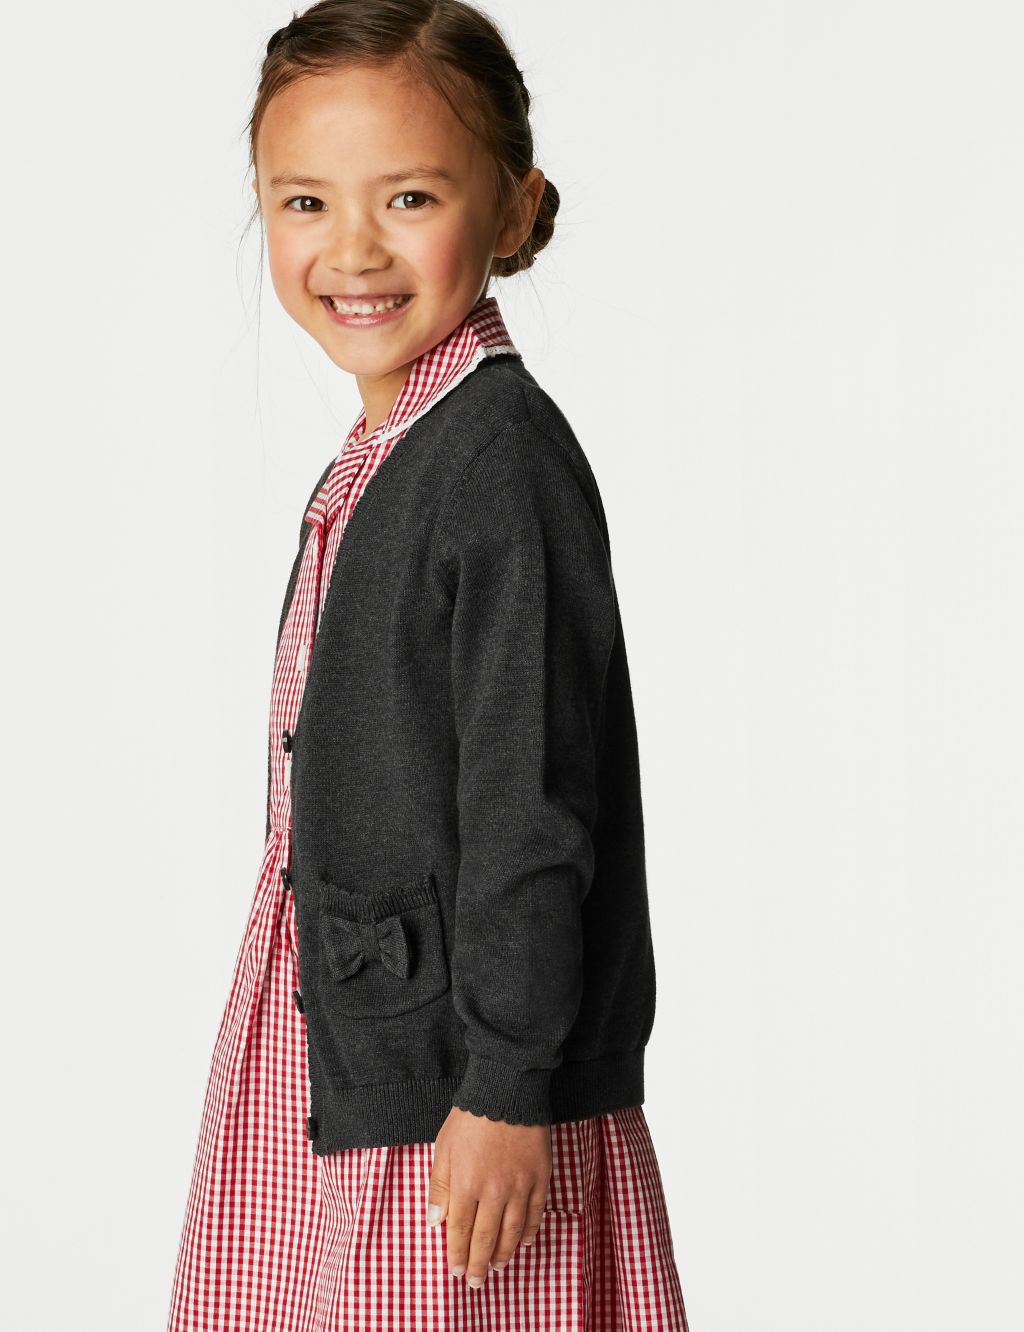 Girls’ Pure Cotton Bow Pocket School Cardigan (3-18 Yrs) image 1